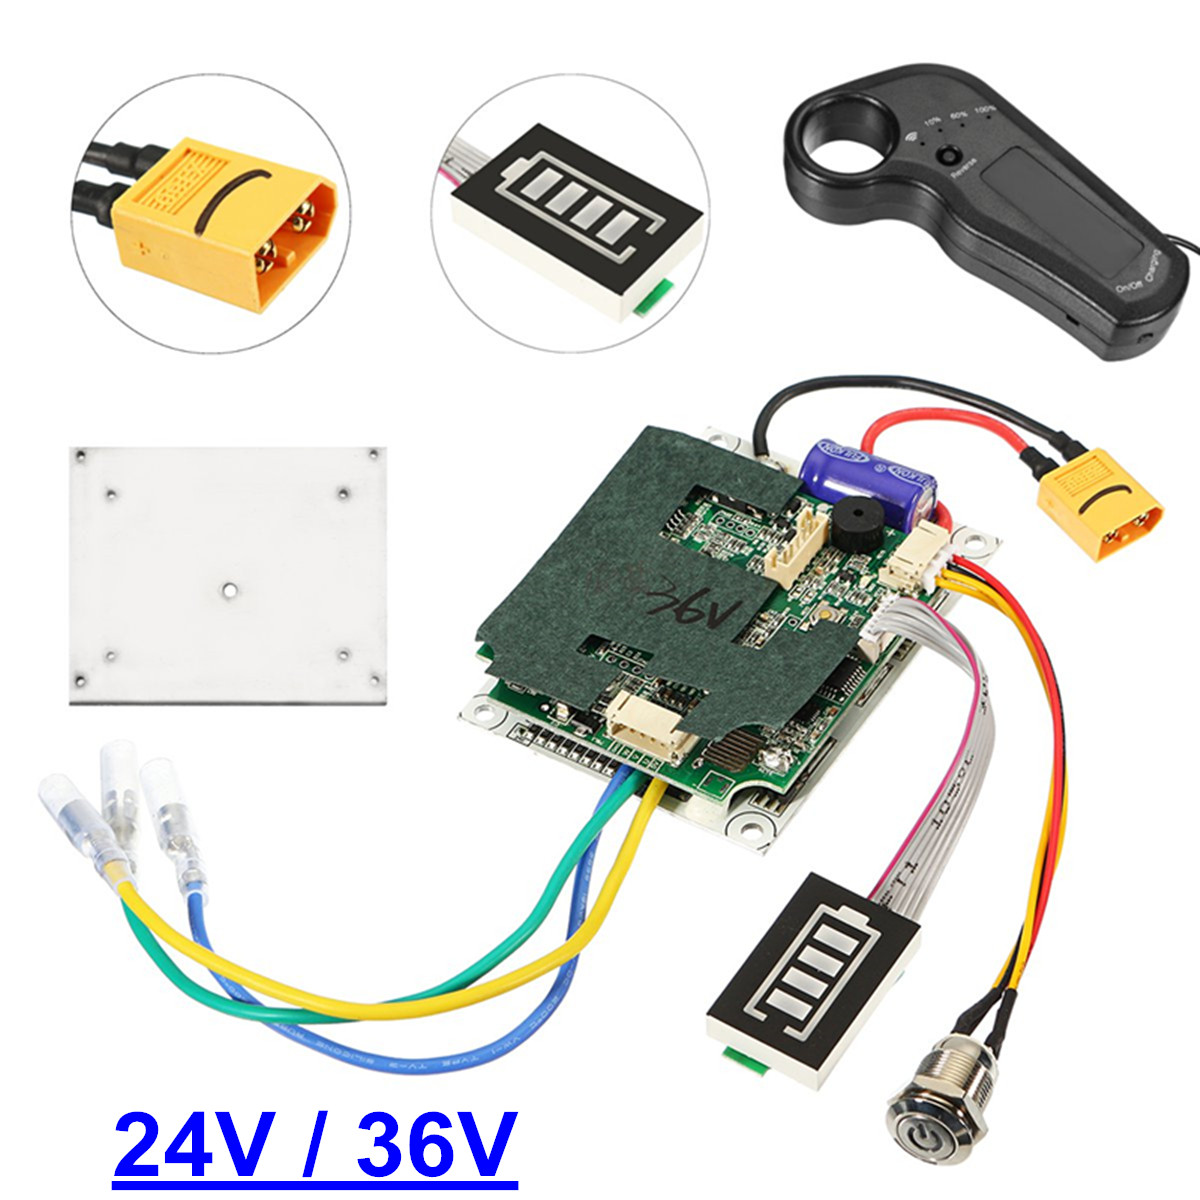 Upgraded 24V/36V Dual Drive Controller ESC Substitute for Electric Skateboard 